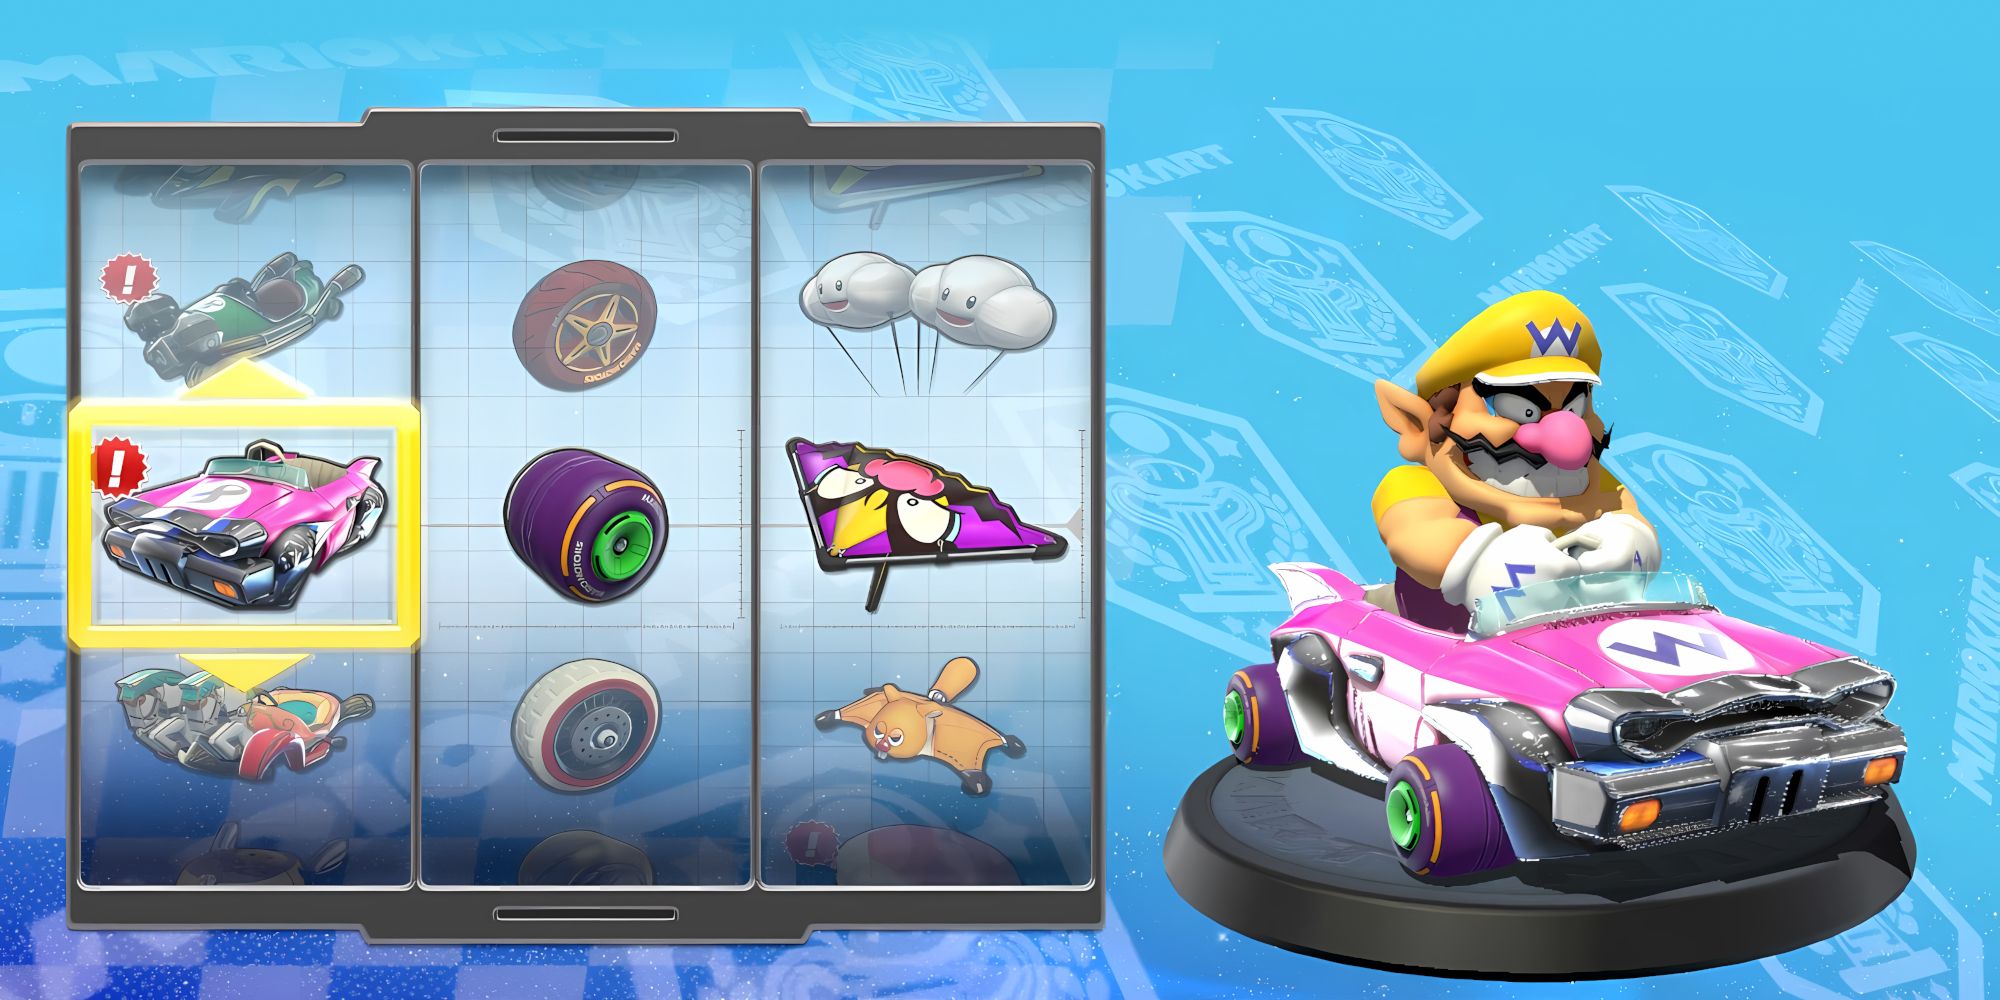 Mario Kart 8 Deluxe Wario in the character selection menu